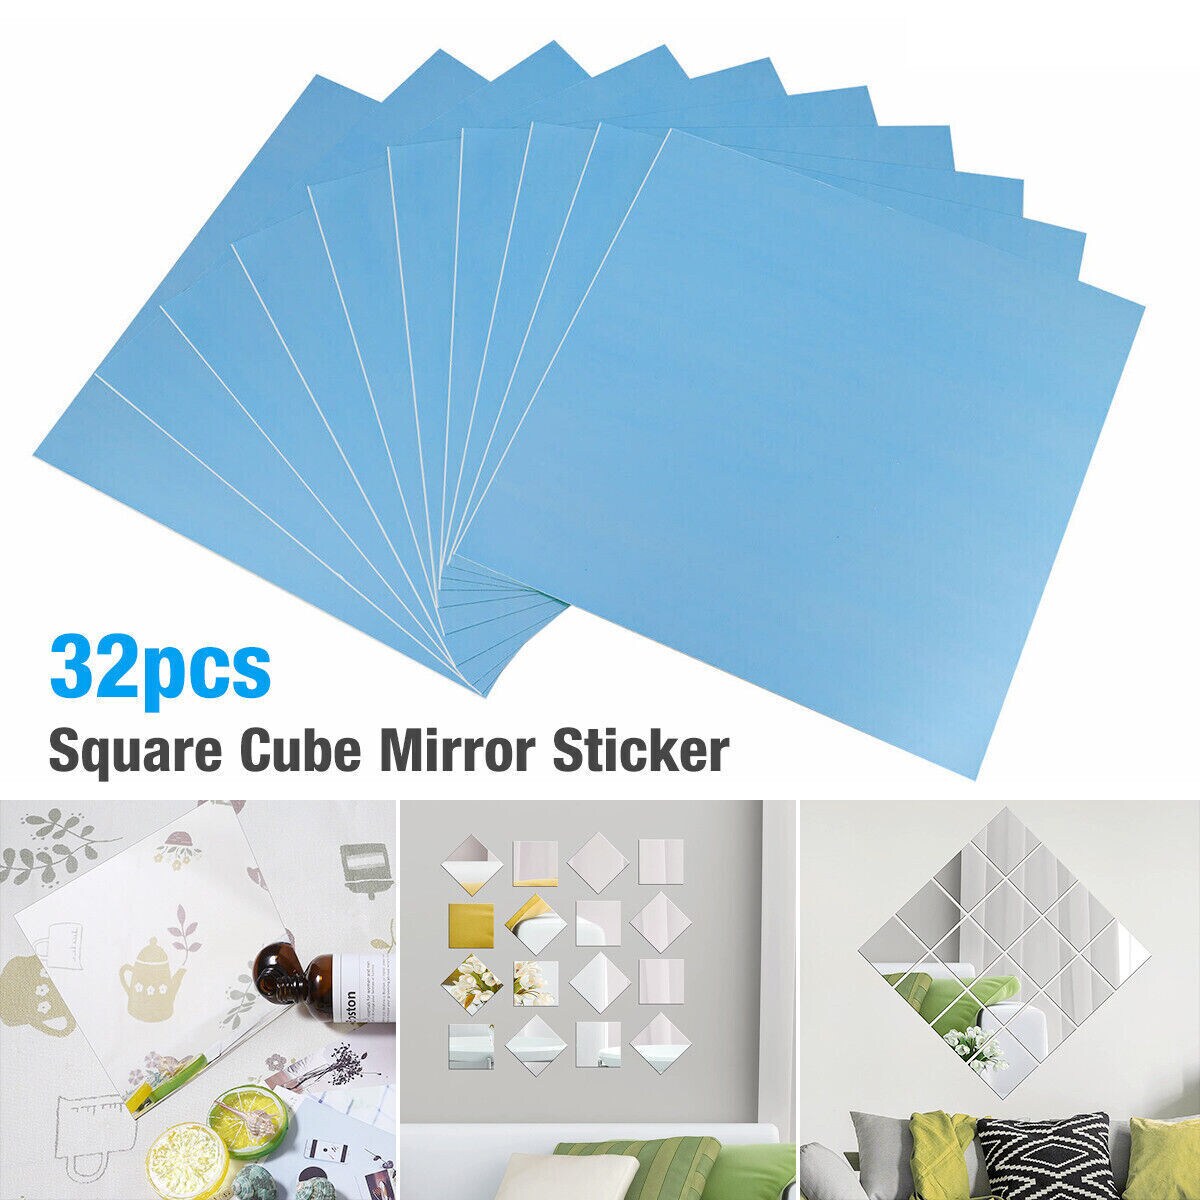 Adhesive Flexible Mirror Sheet 32 pcs